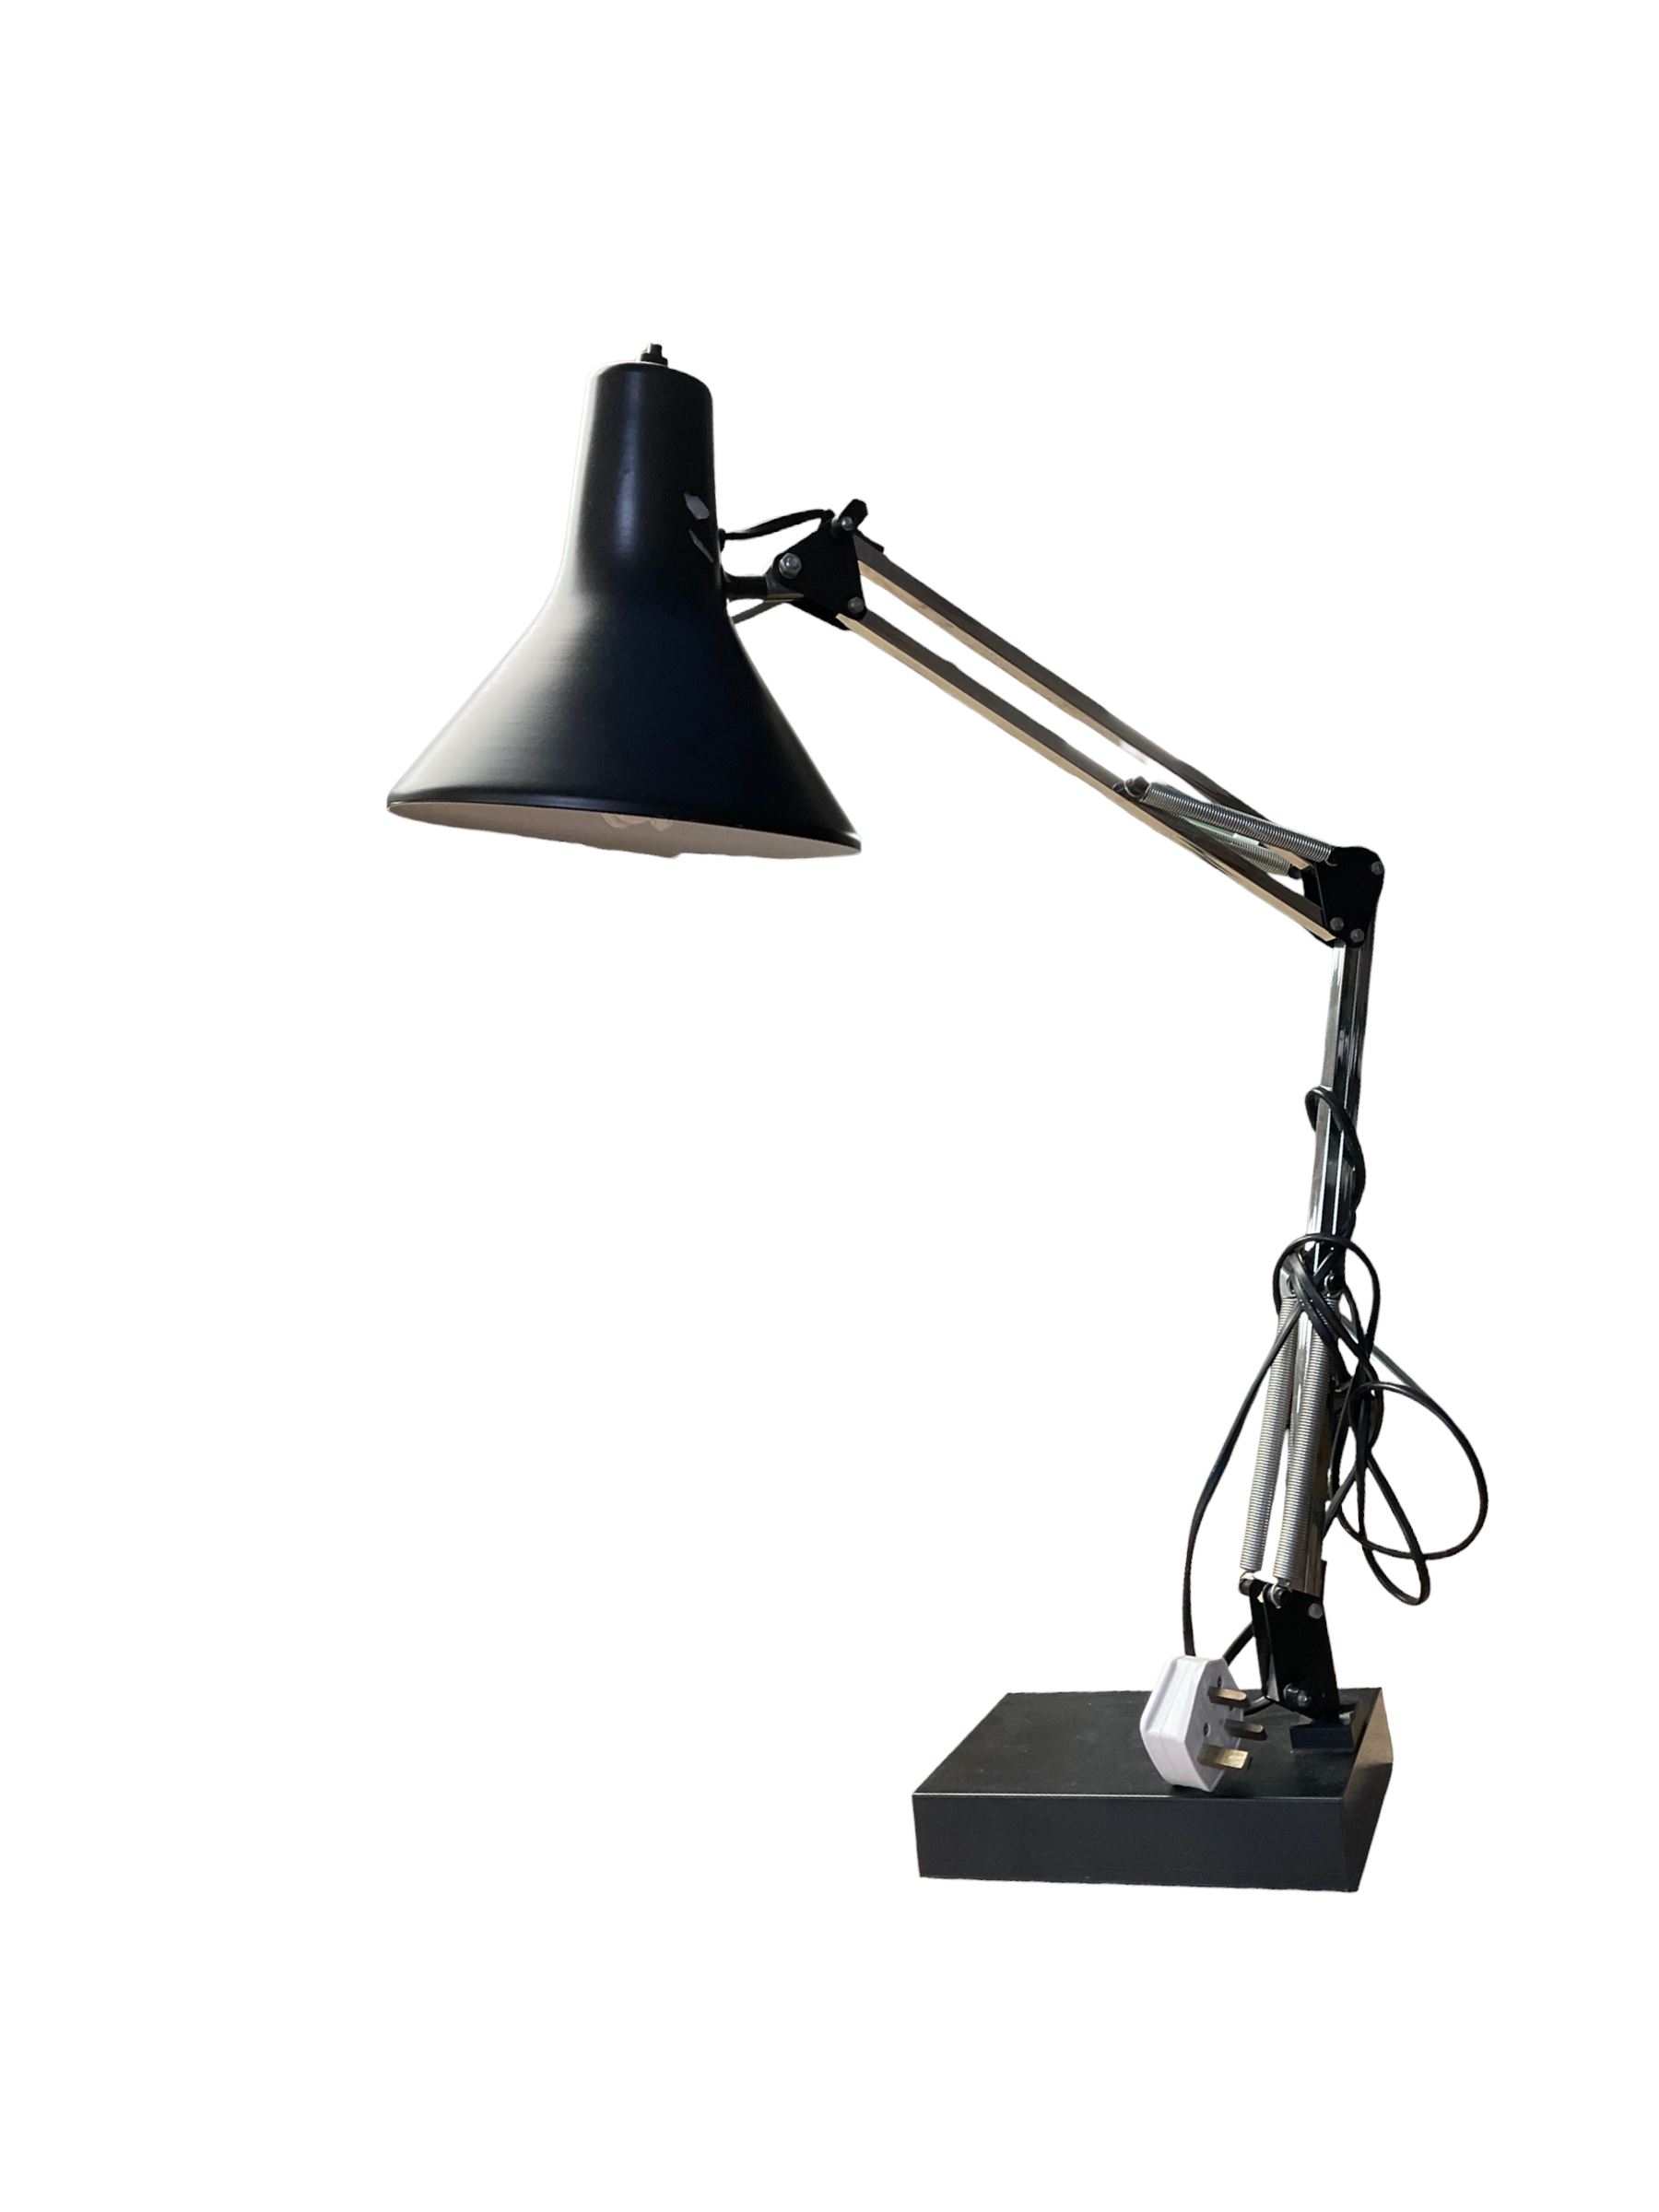 Angle poise style lamp upon a rectangular base